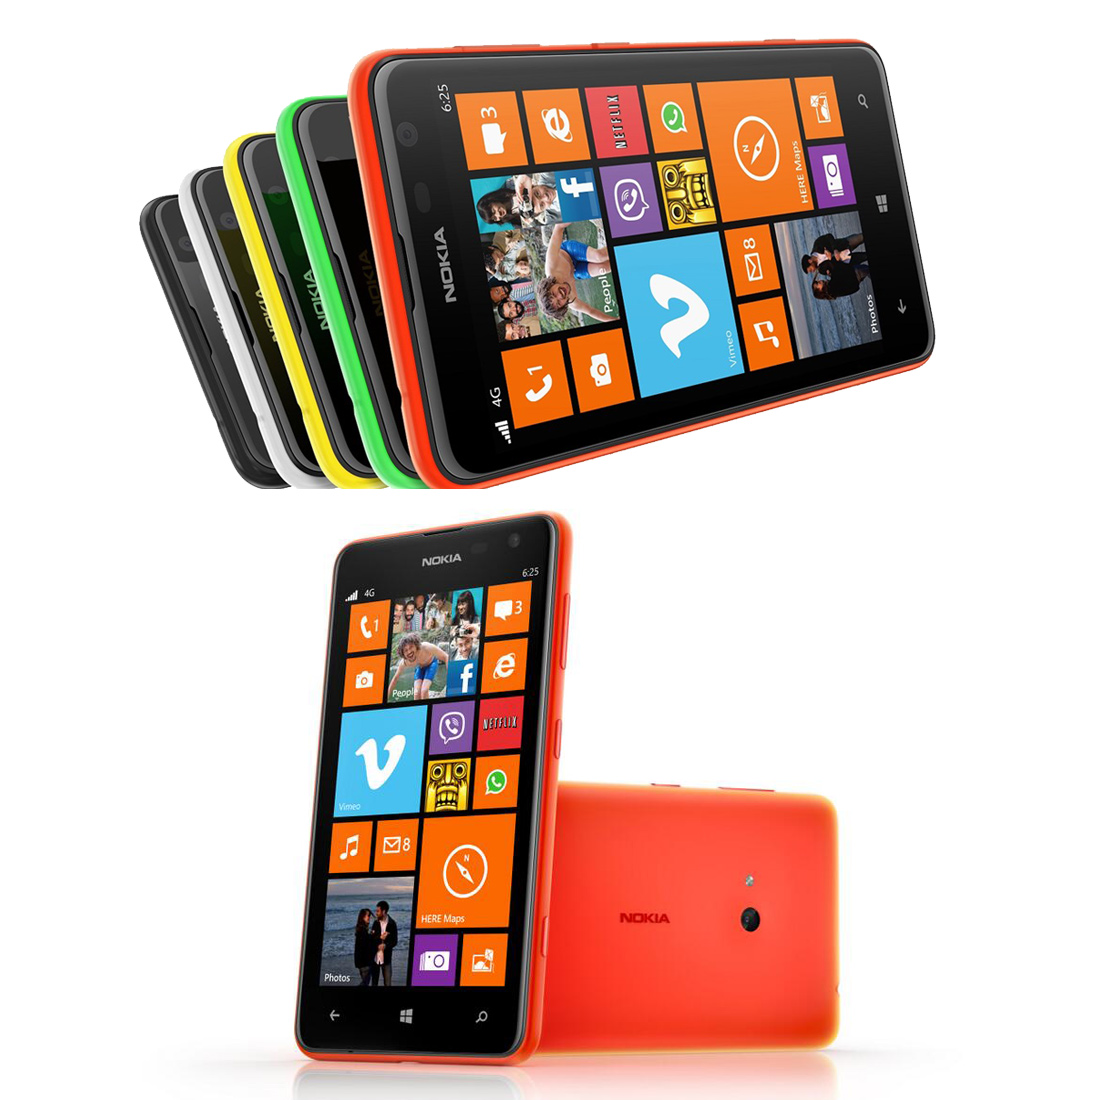 جوال نوكيا لوميا 625 – Nokia Lumia 625